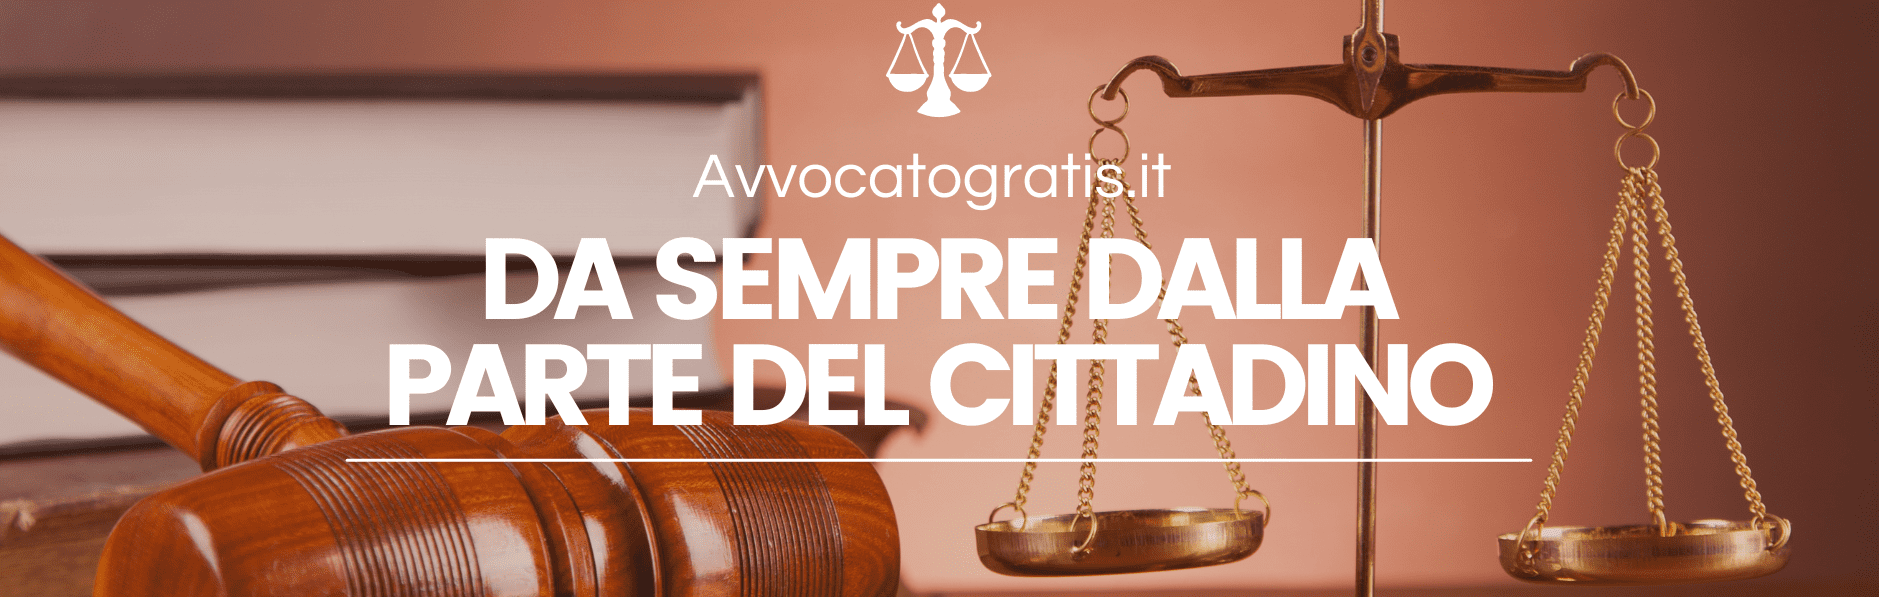 www.avvocatogratis.it Consulenza legale